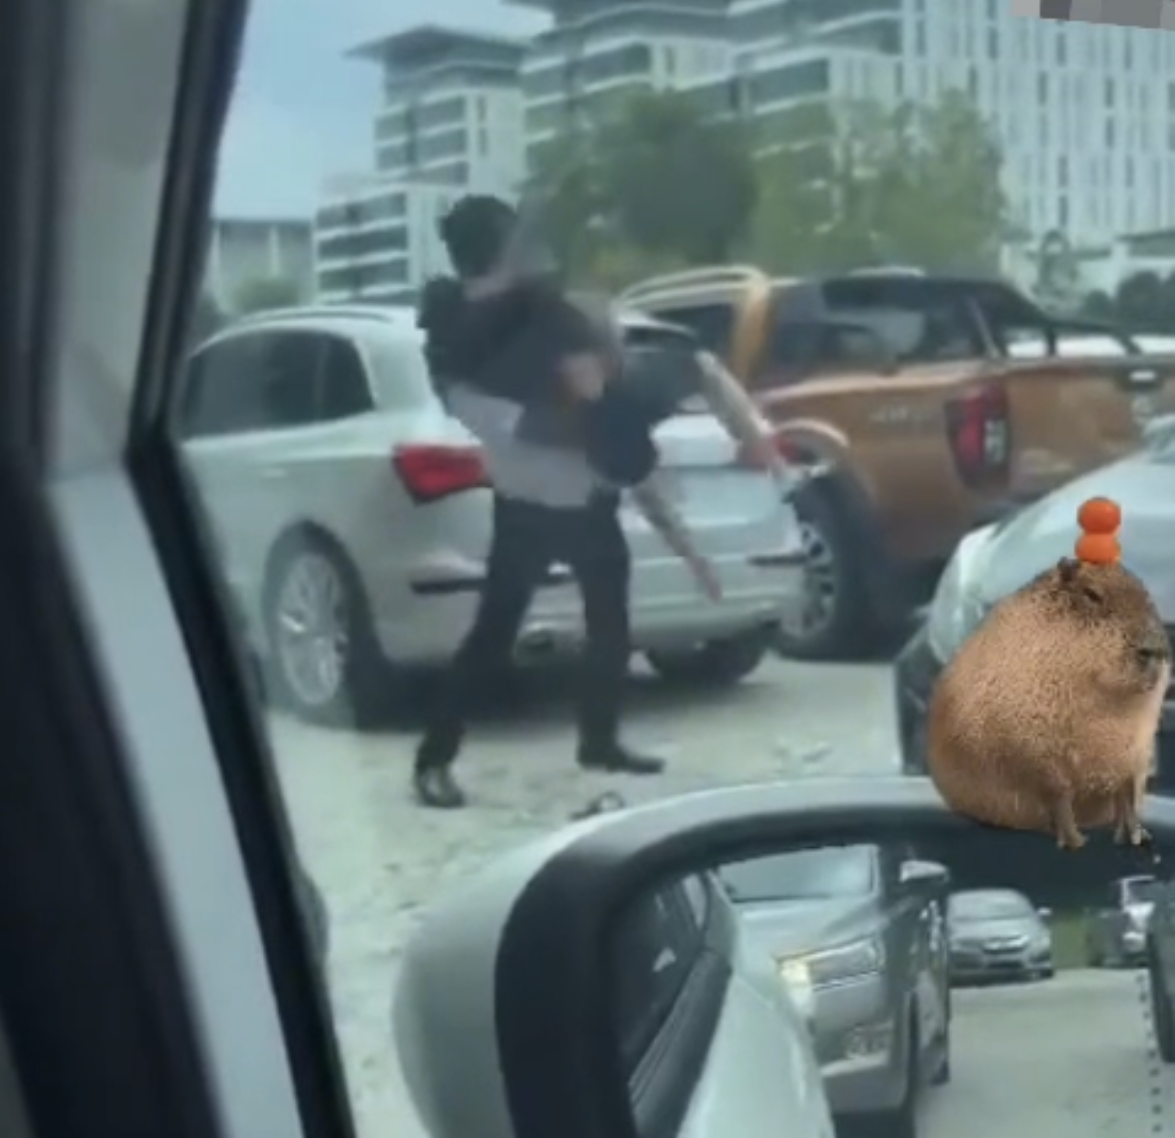 Student & security guard seen exchanging blows at carpark near m'sian uni in subang | weirdkaya